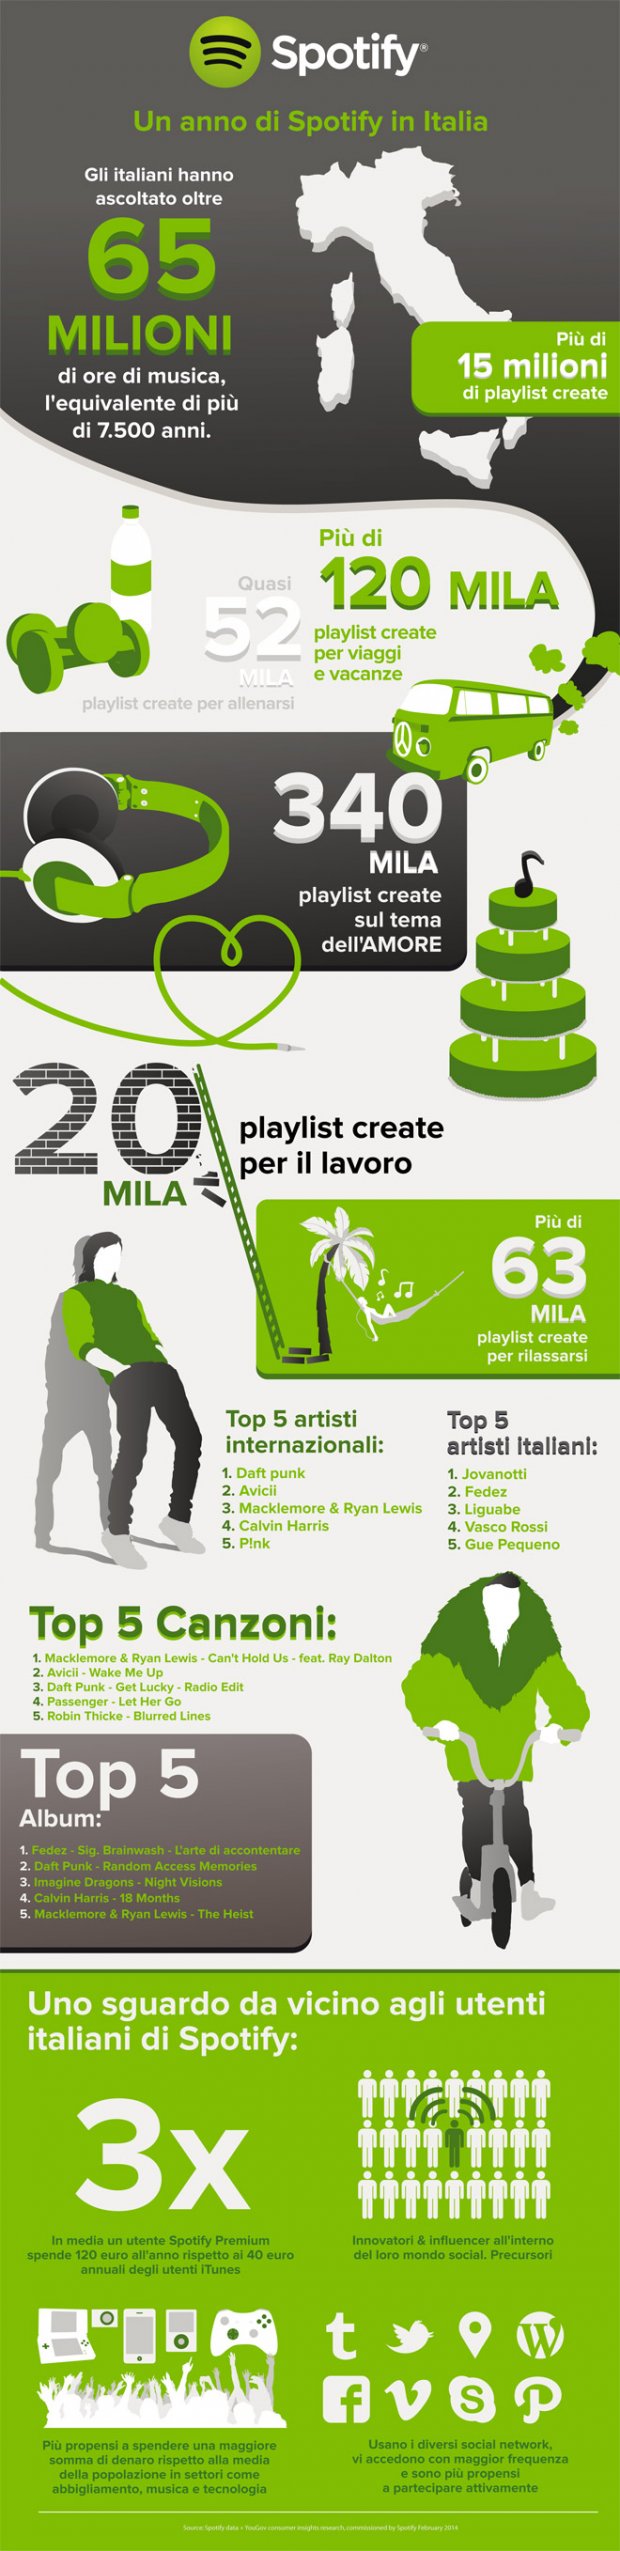 Spotify-infografica-italia